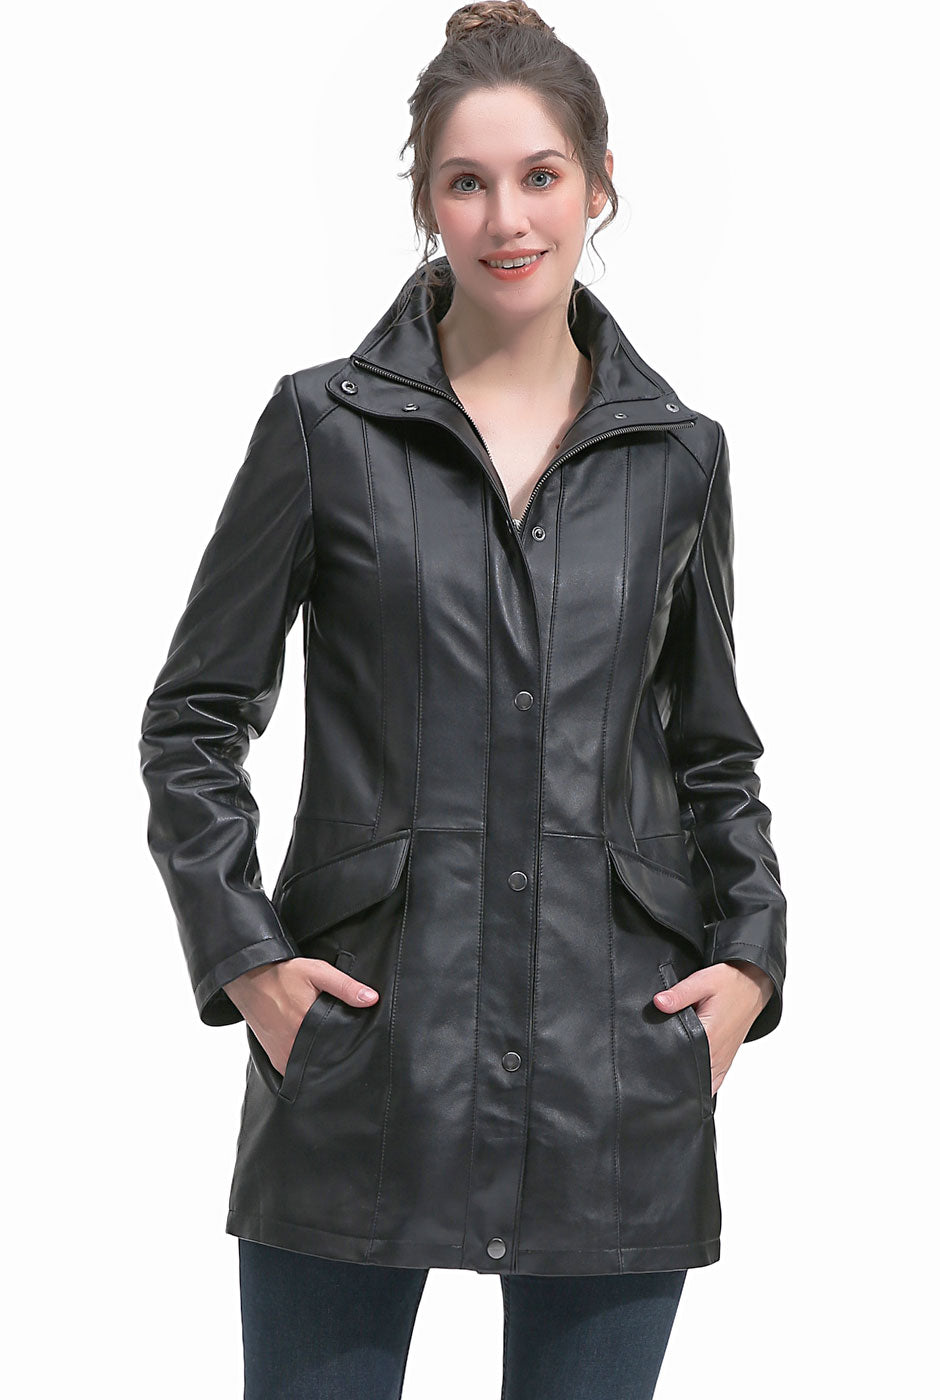 Black Leather Trench Coat Women's Genuine Lambskin Winter Long Overcoat  Jacket